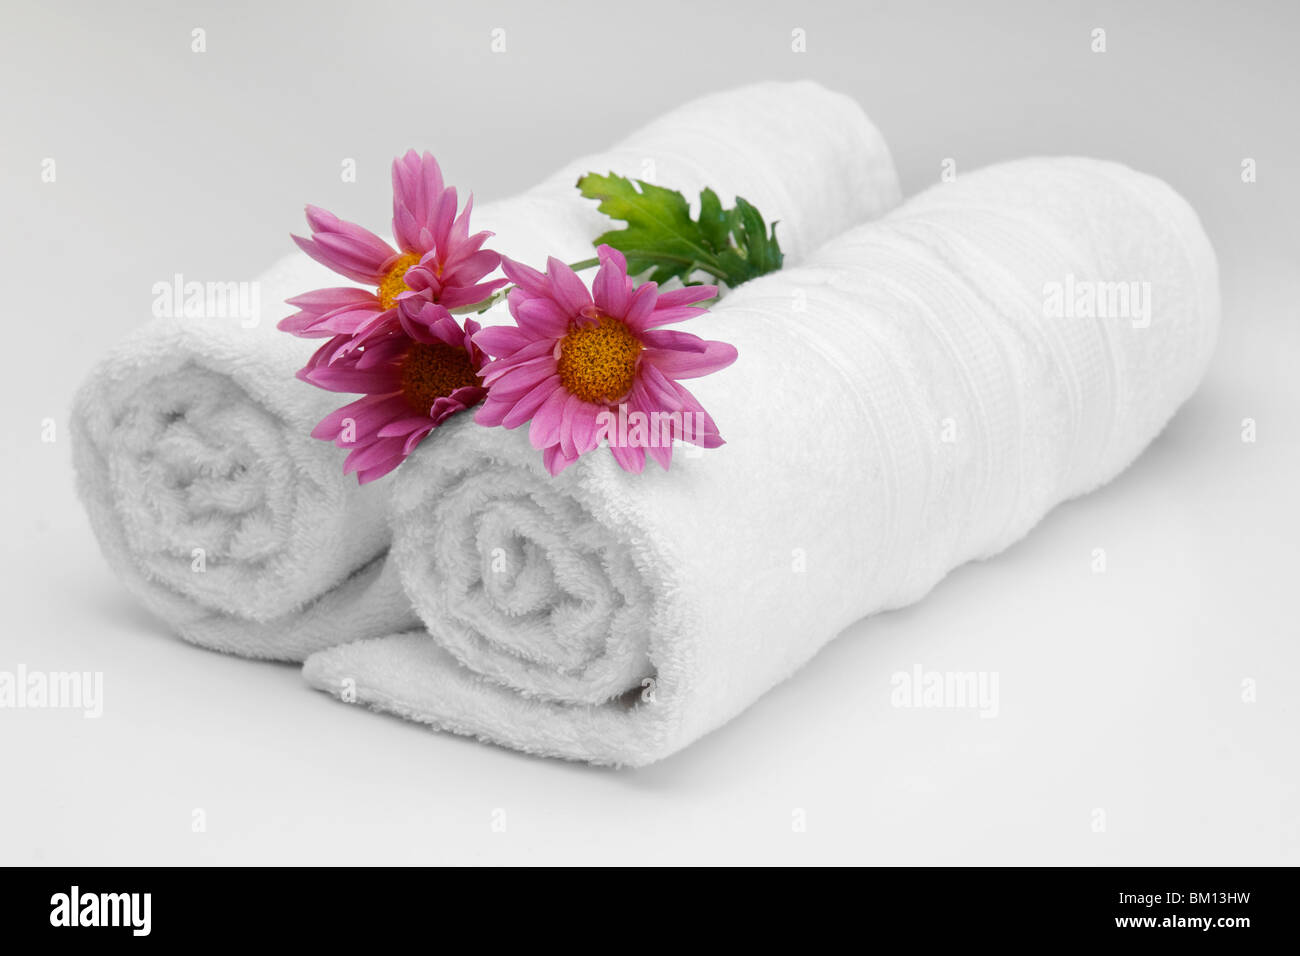 https://c8.alamy.com/comp/BM13HW/close-up-of-rolled-up-towels-with-flowers-BM13HW.jpg